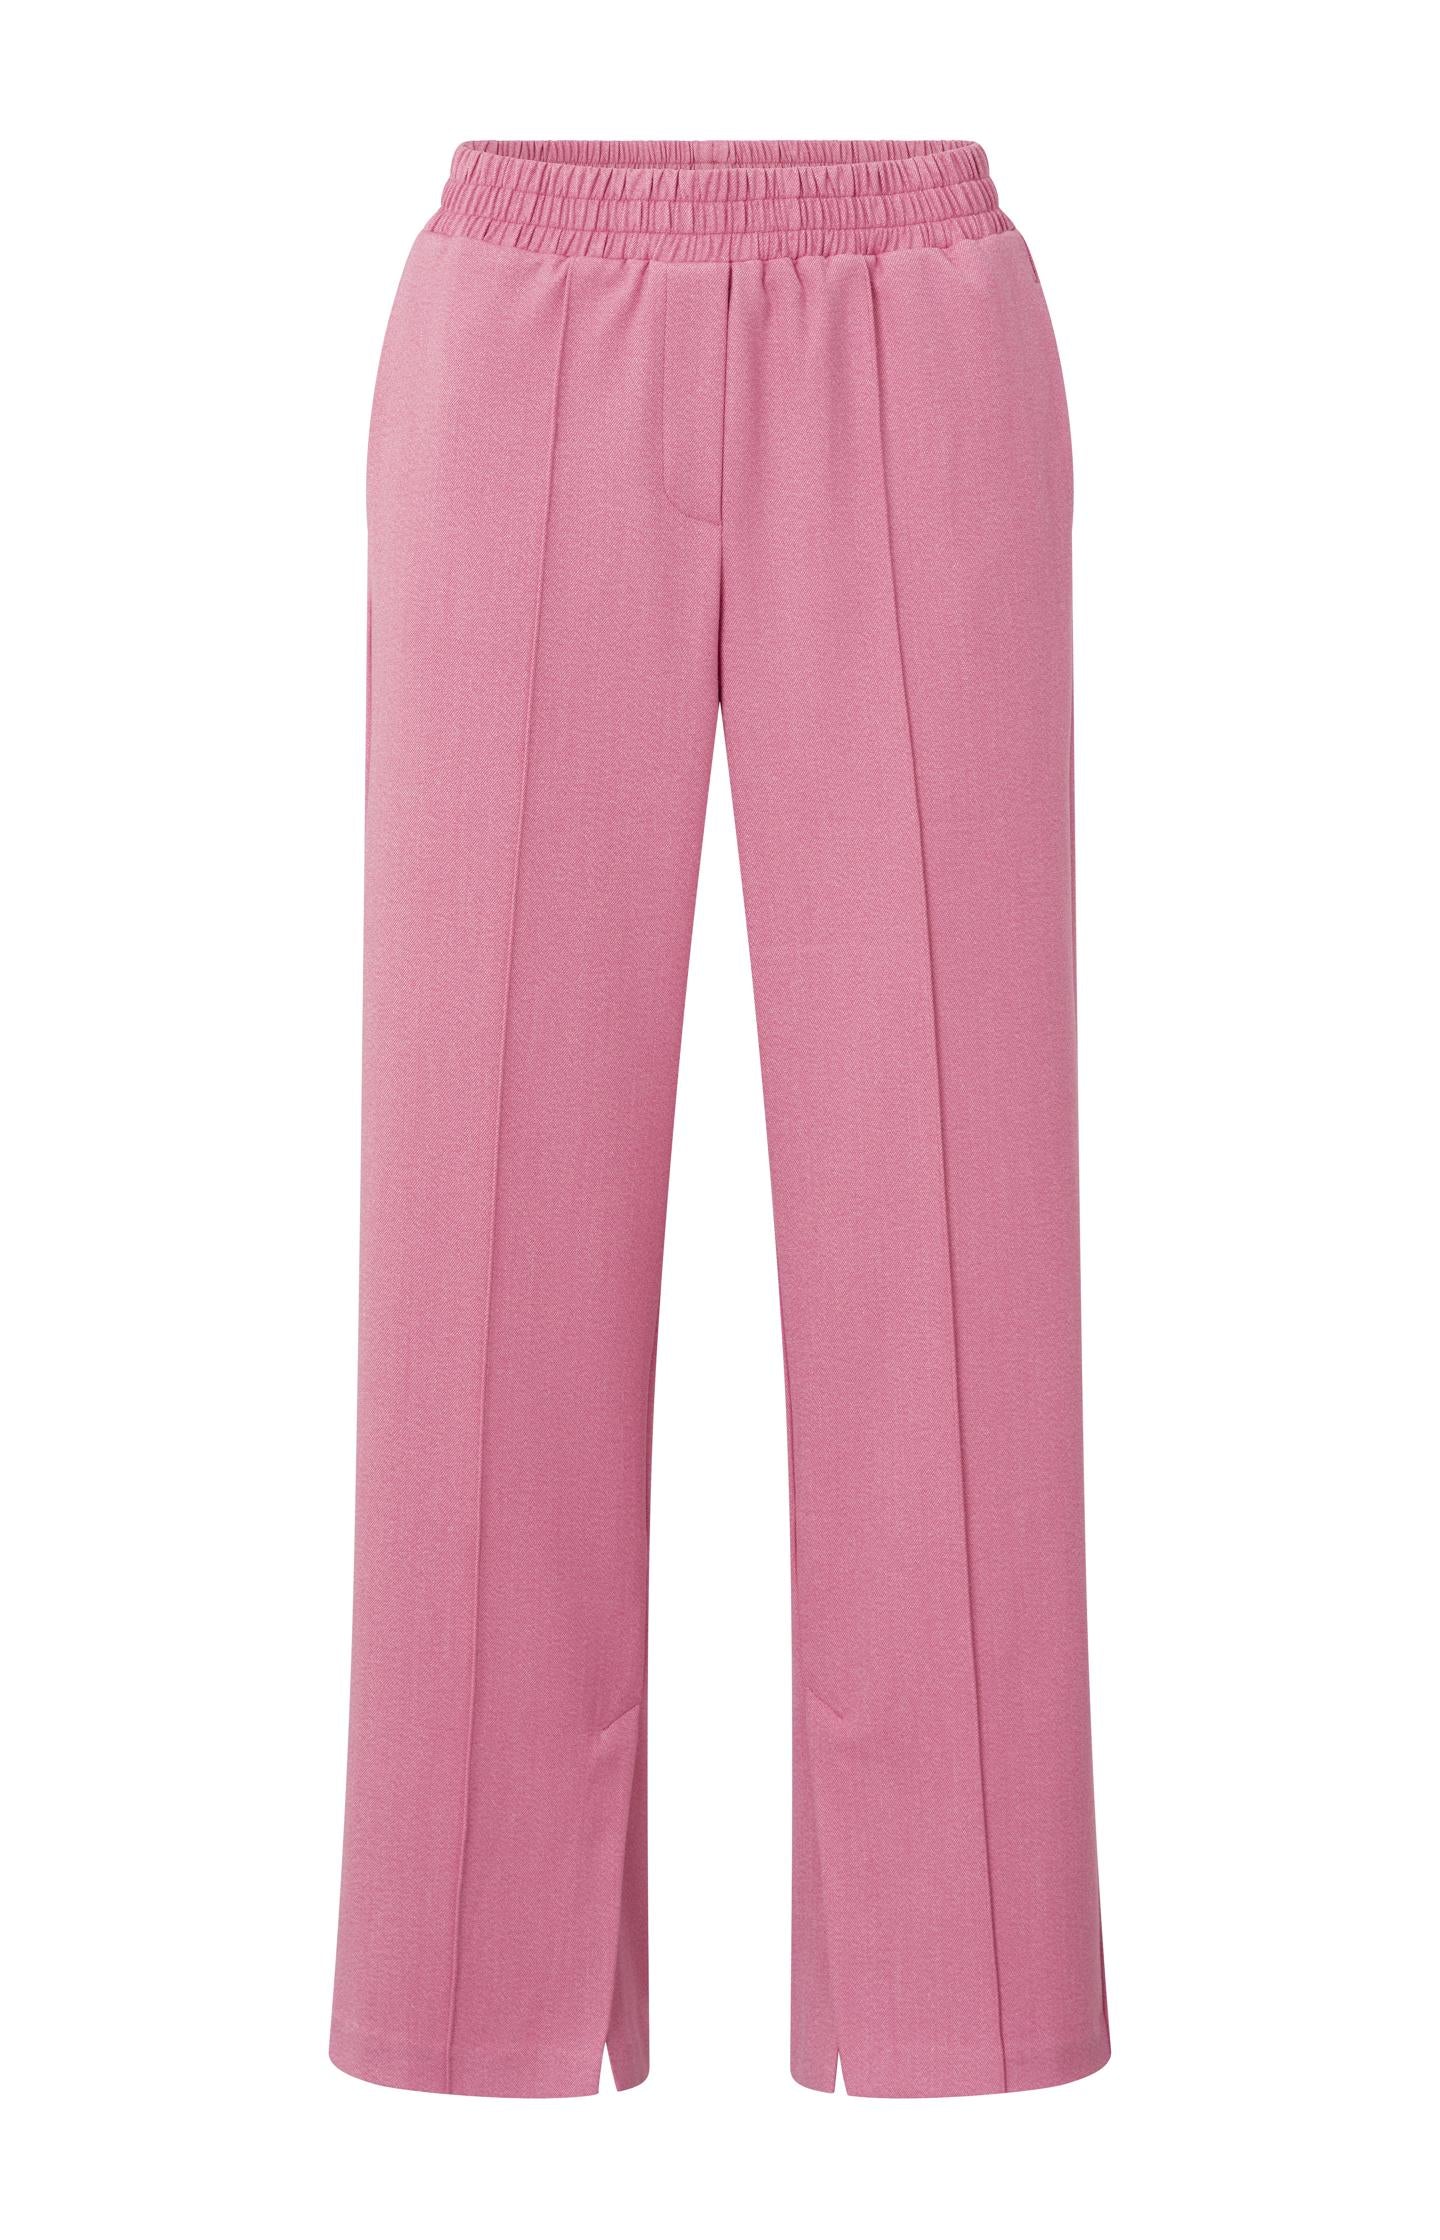 Yaya Soft Woven Wide Leg Trousers With Slits - Morning Glory Pink Melange